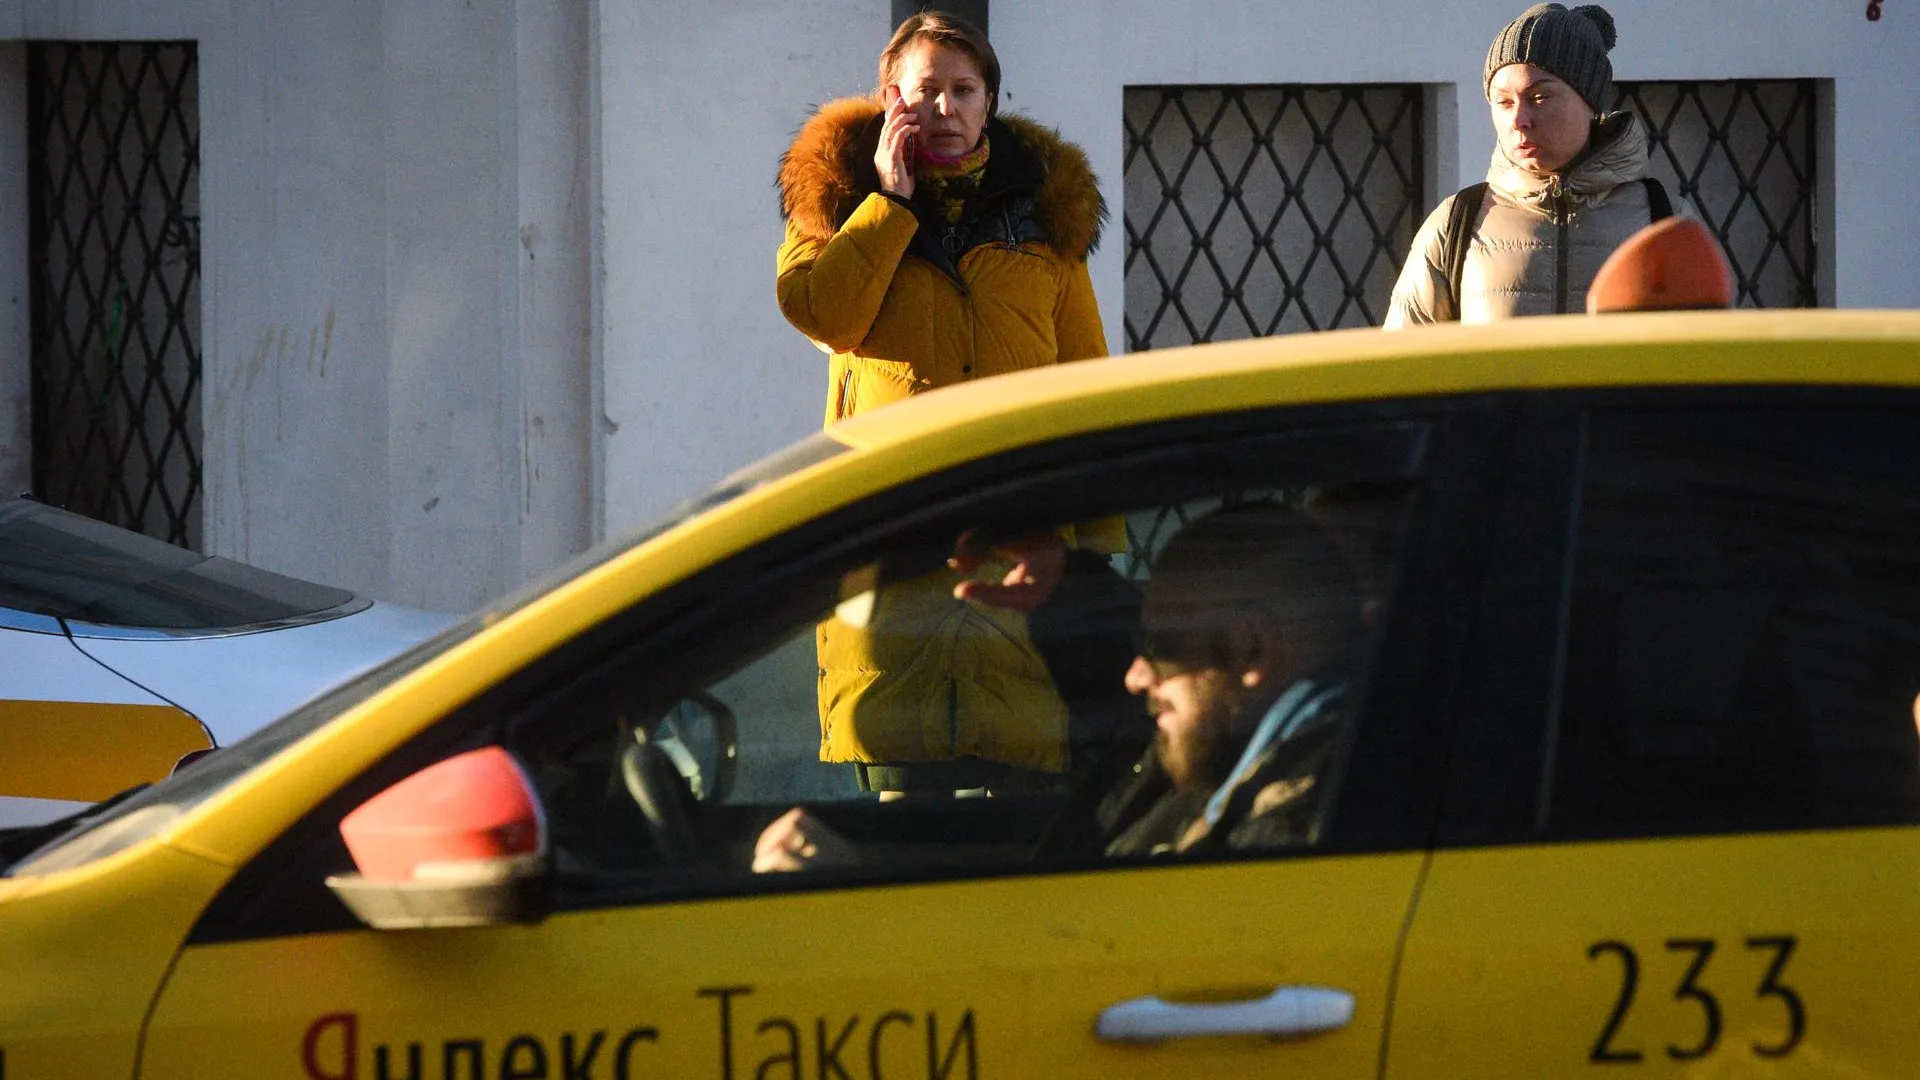 Сбой произошел в работе сервисов такси «Яндекс Go» и Uber